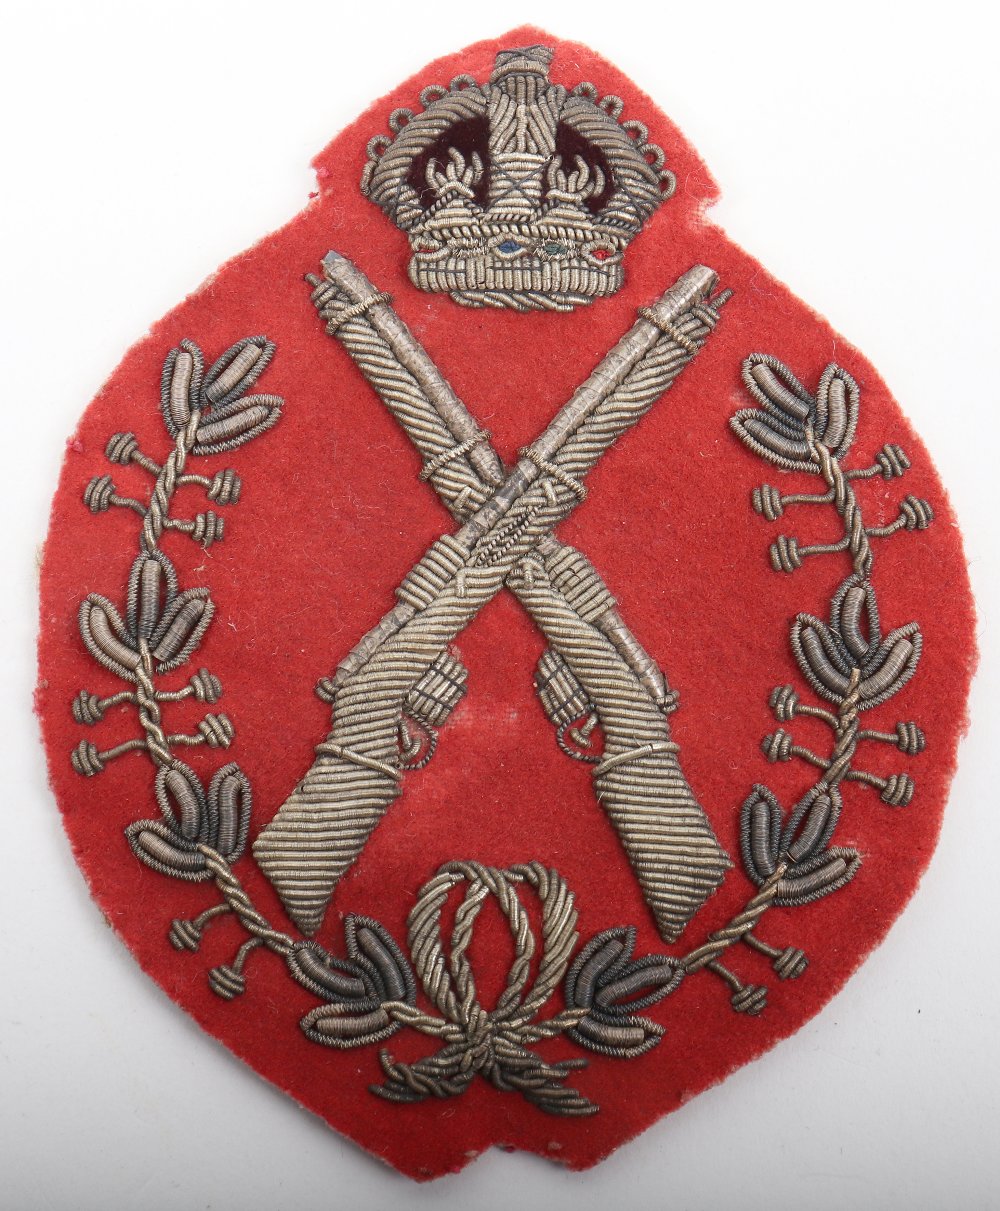 Post 1902 British Army Shooting Prize Cloth Arm Badge